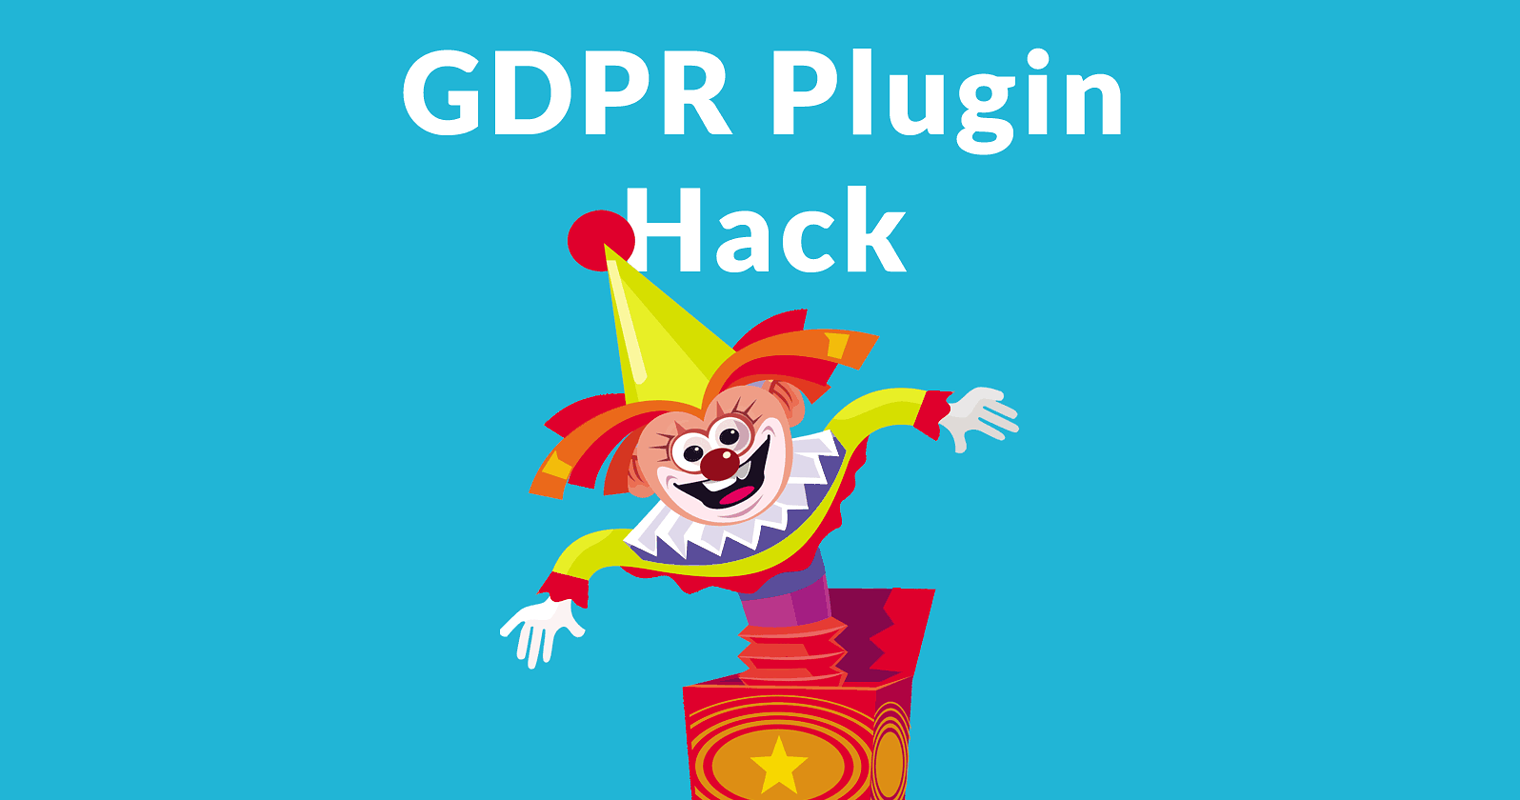 WP GDPR Plugin Hacked – Update Immediately